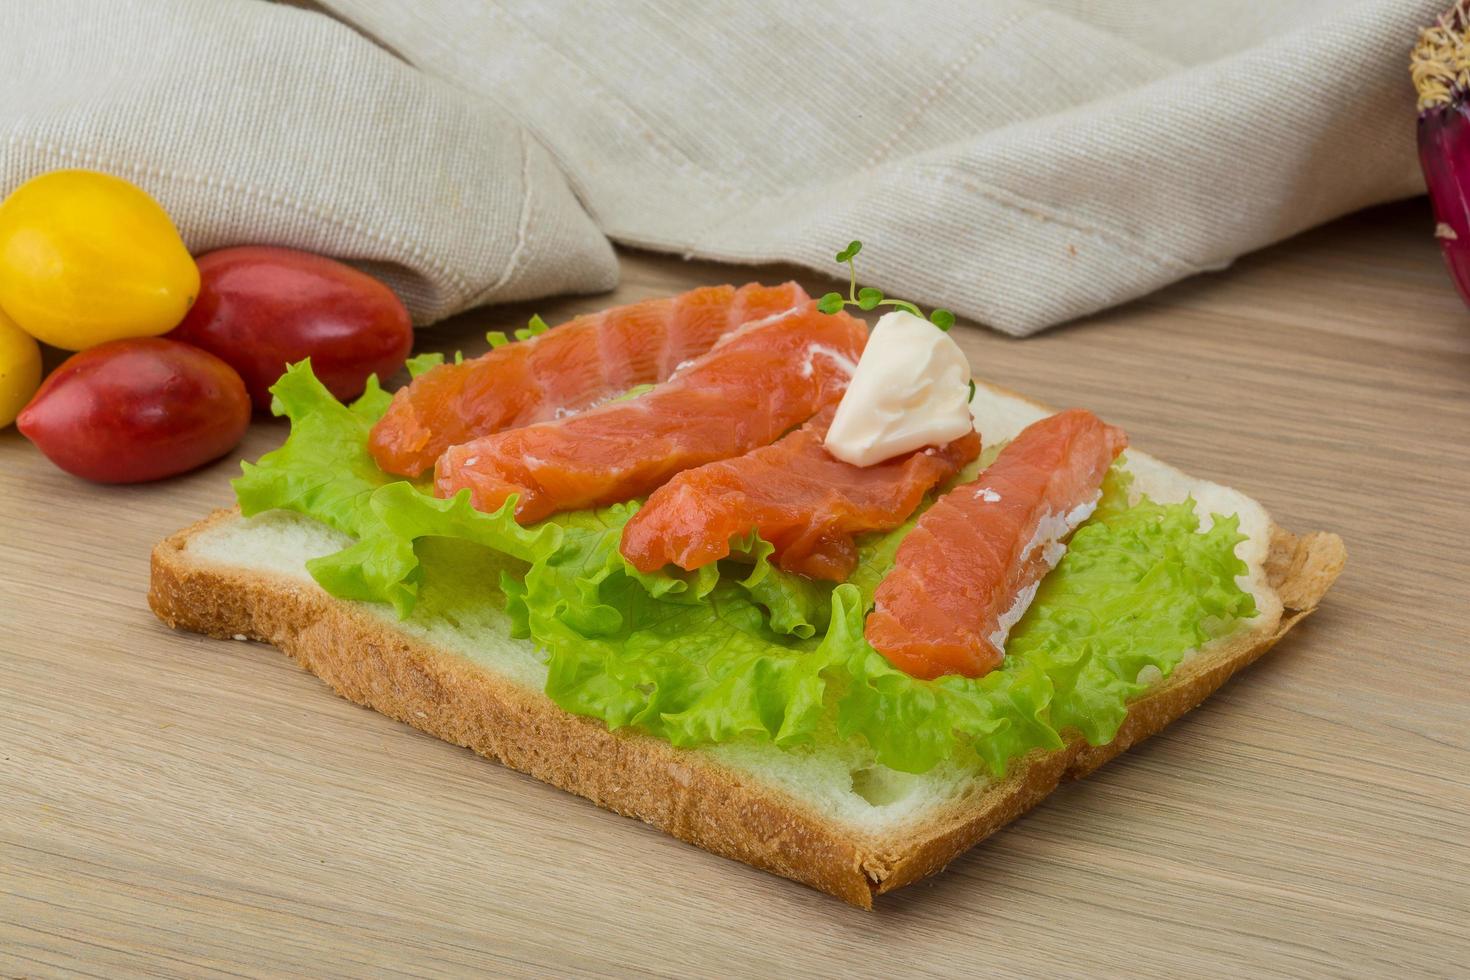 lax smörgås på trä- bakgrund foto